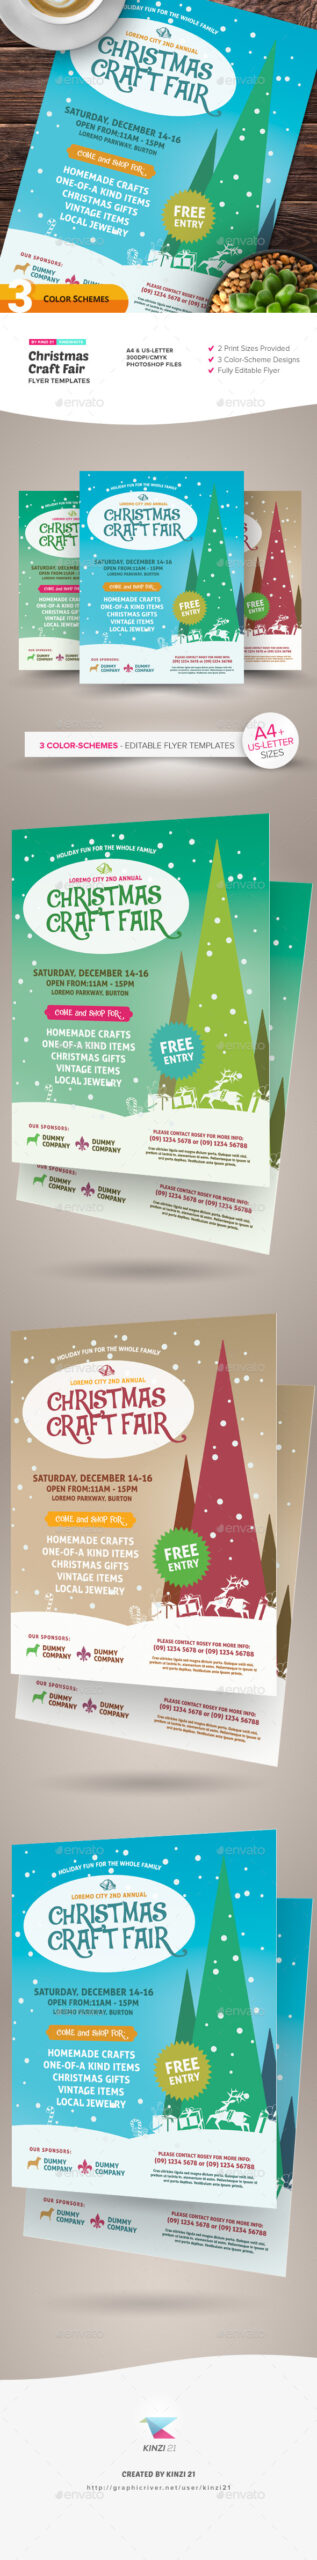 Christmas Craft Fair Flyer Templates In Craft Show Flyer Template With Craft Show Flyer Template